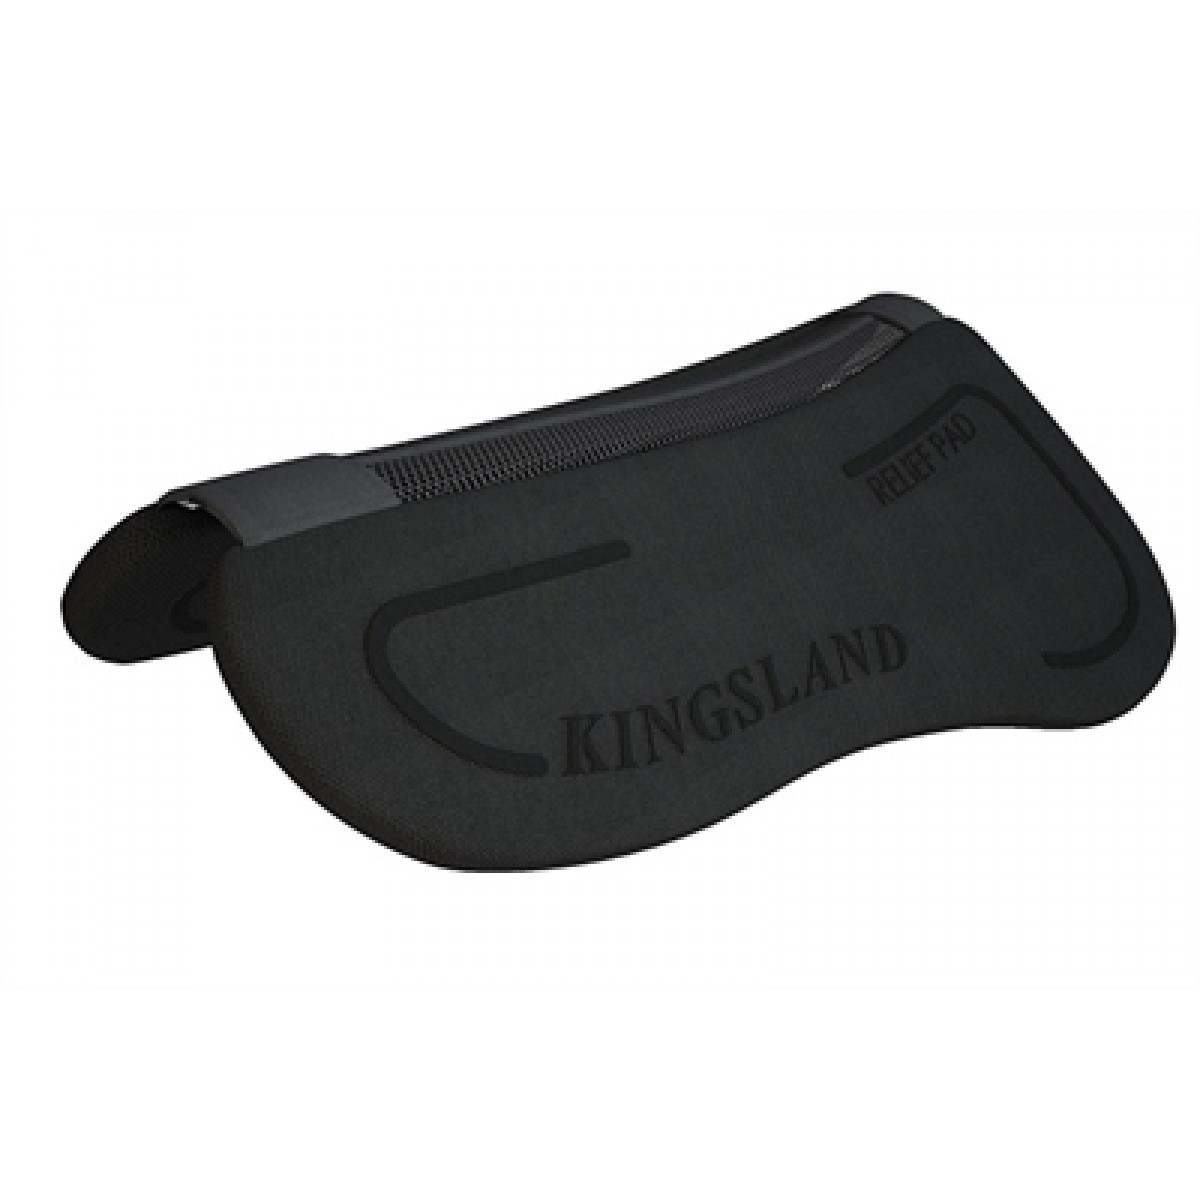 Kingsland Relief Pad